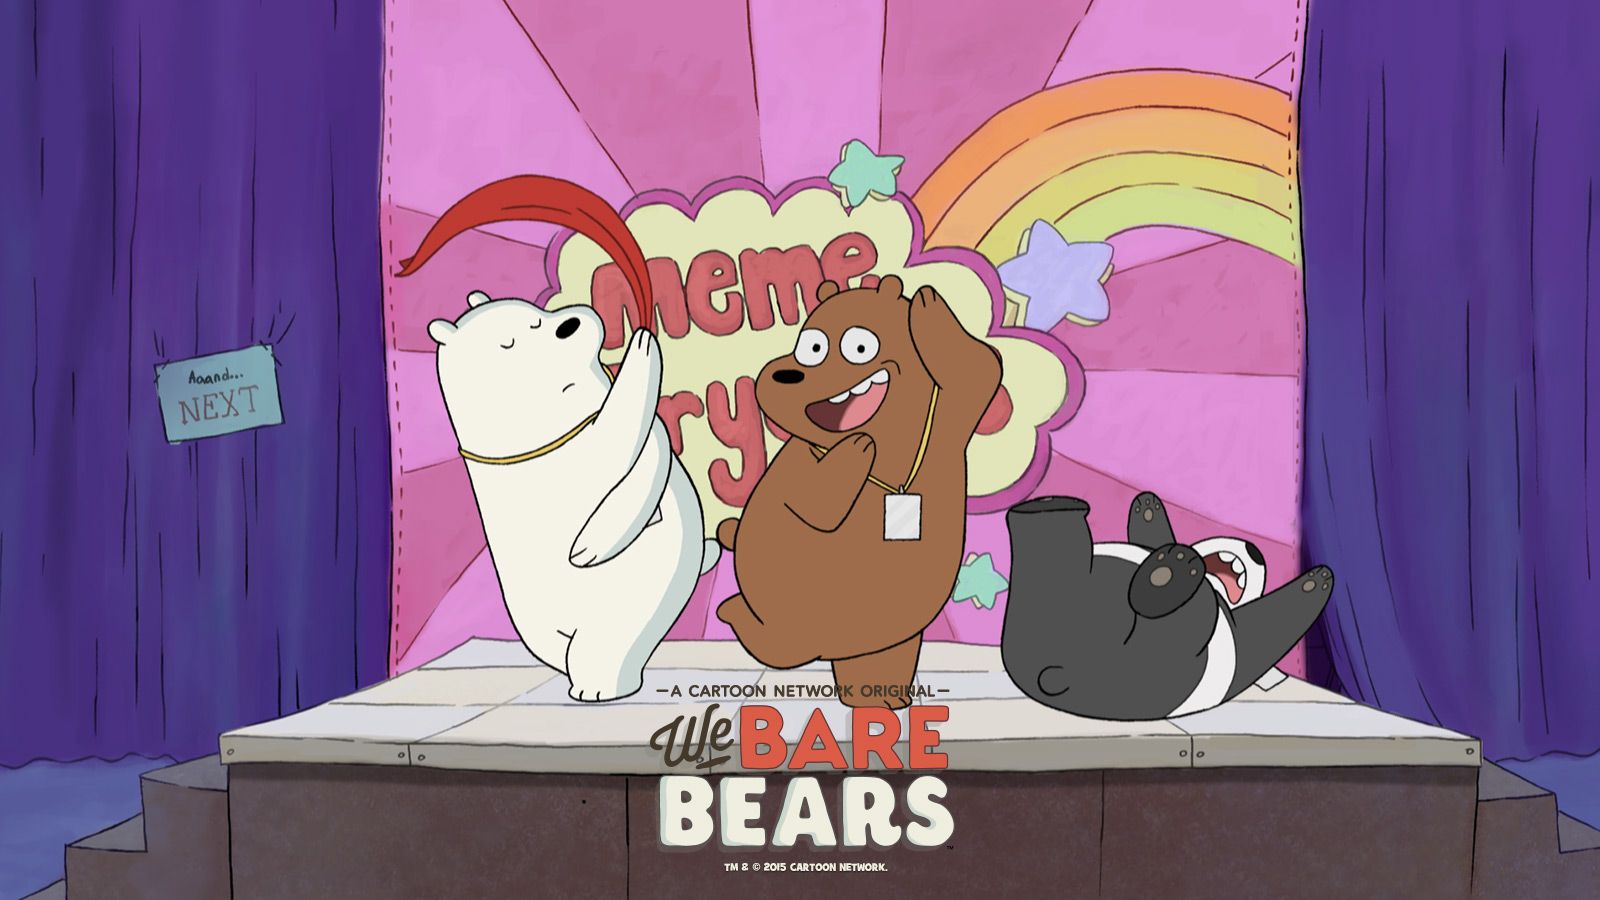 A cartoon of bears on stage with rainbow - We Bare Bears